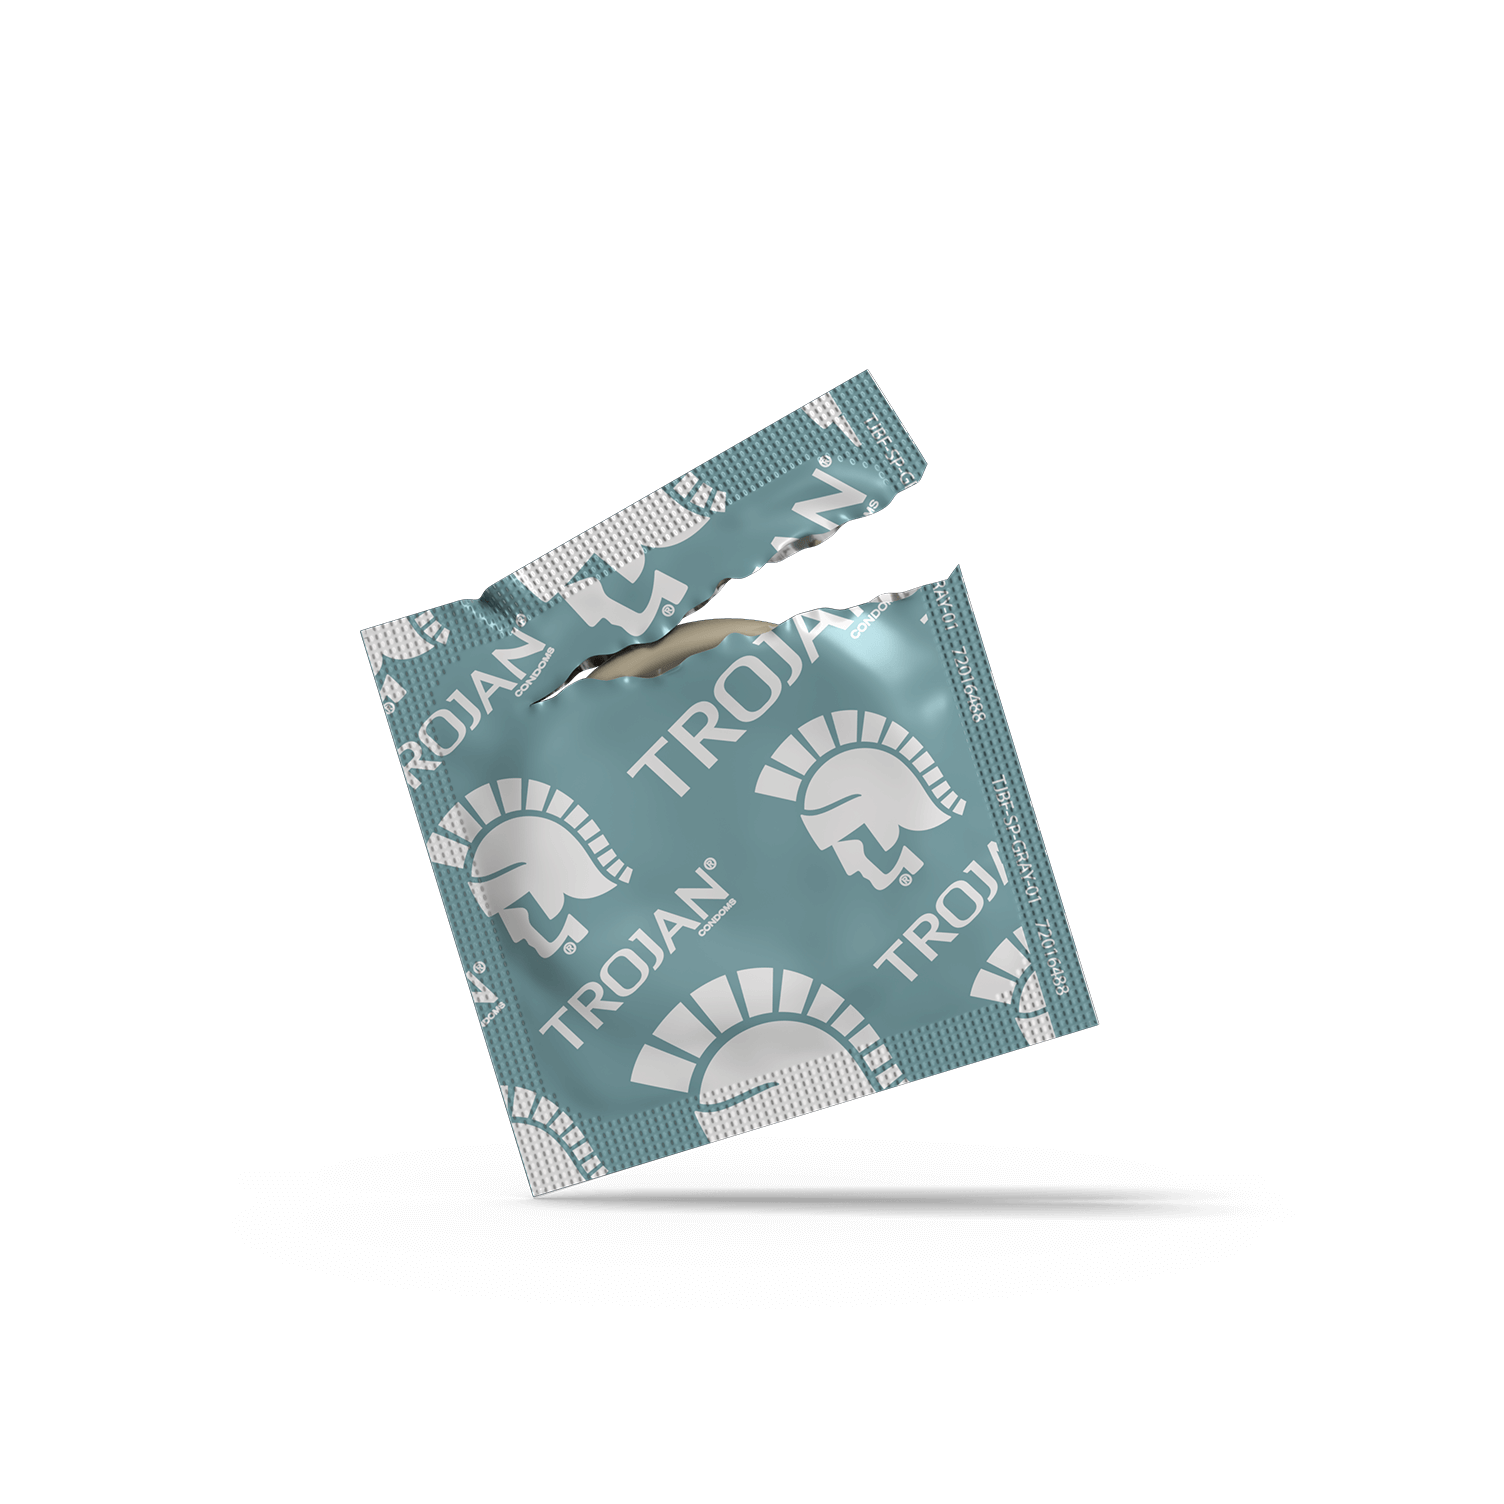 open trojan condom wrapper